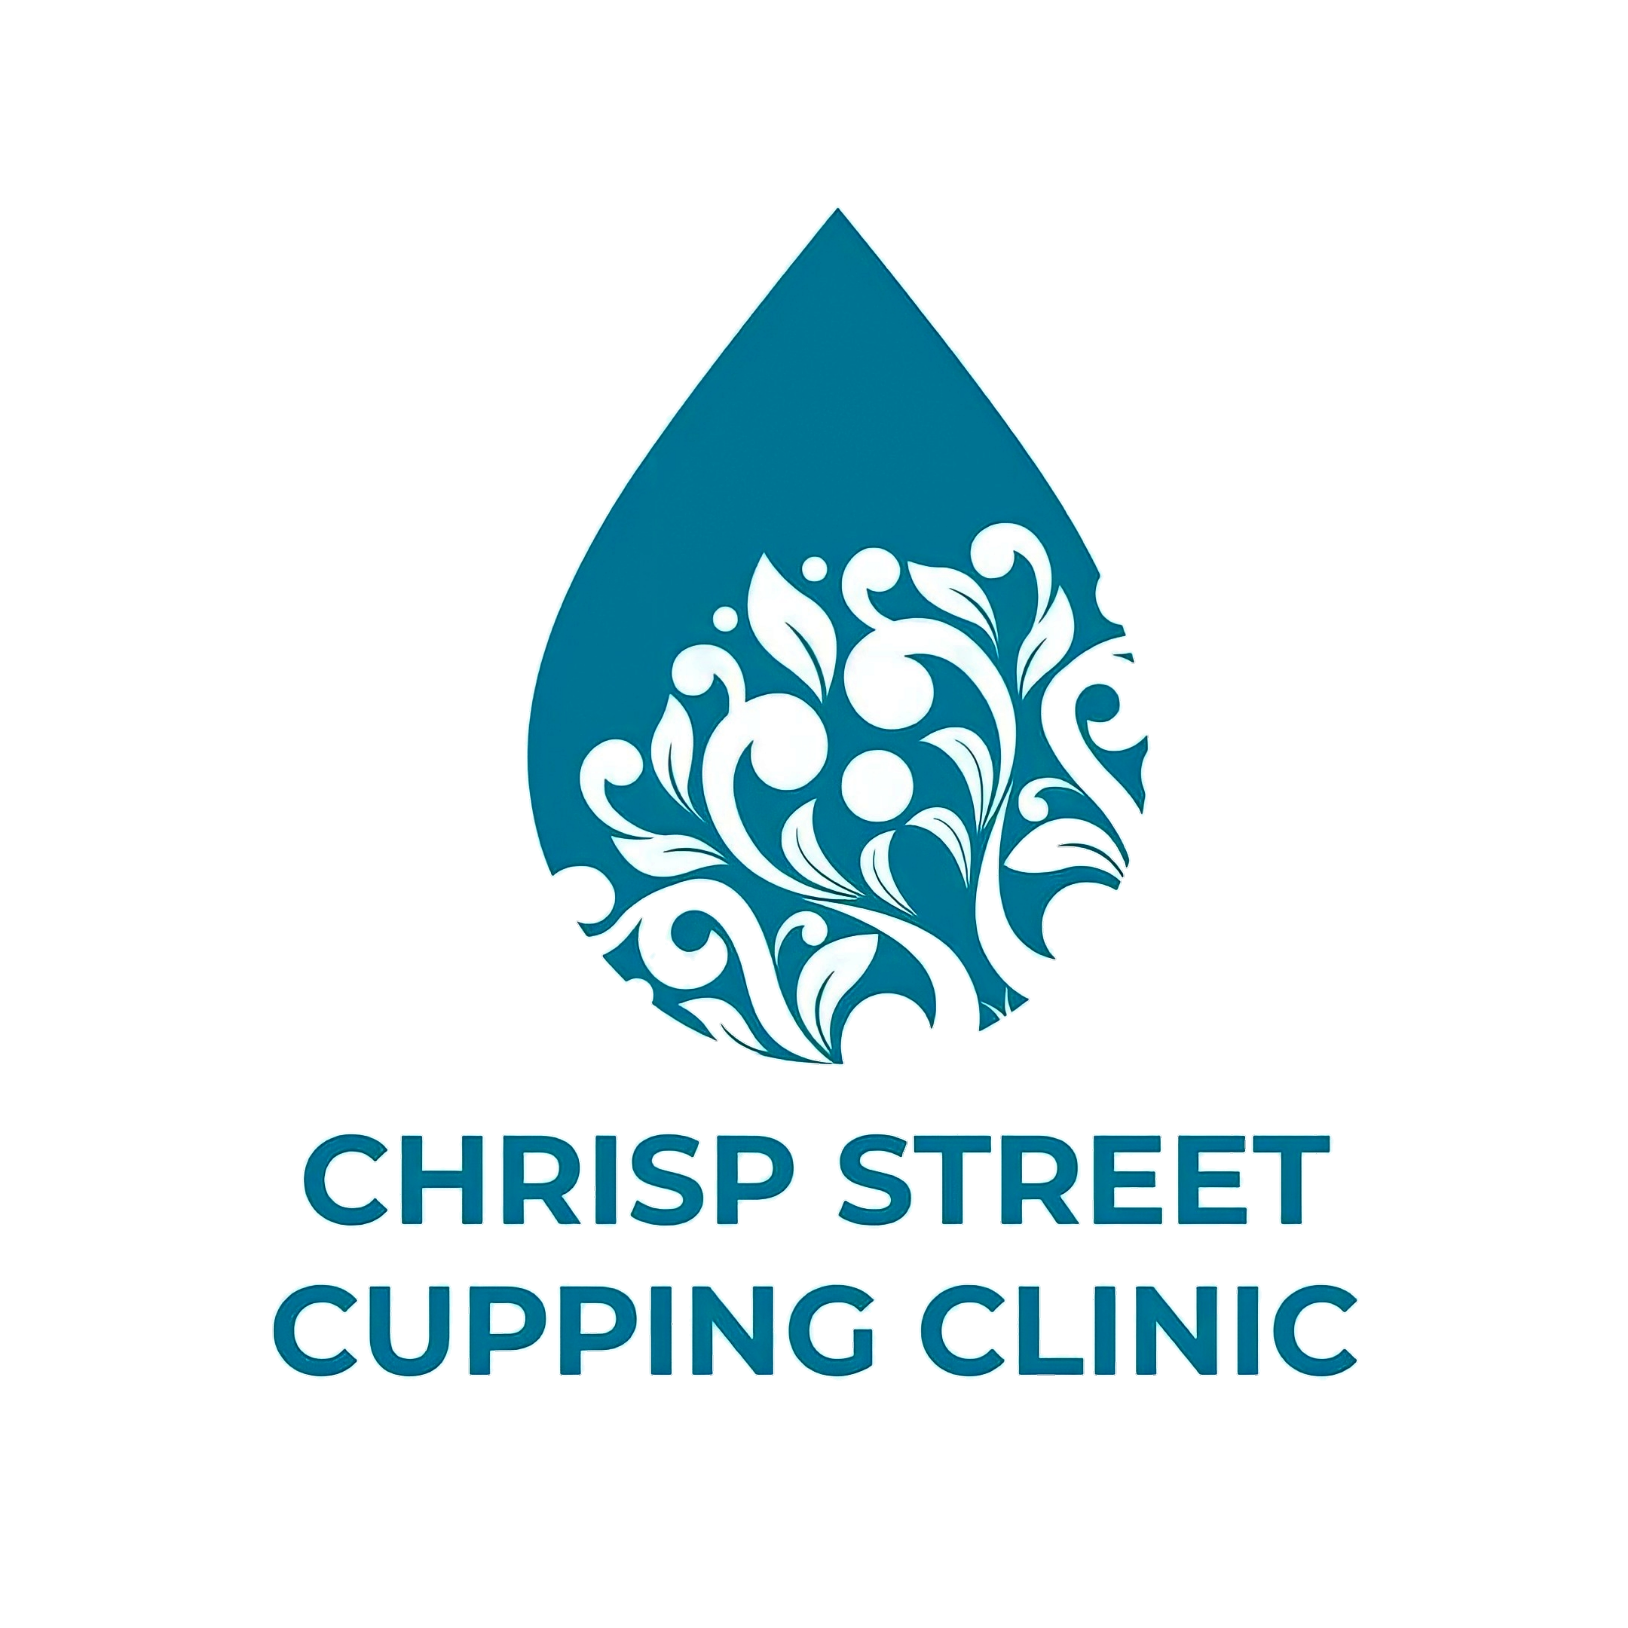 Crisp Street Cupping Clinic